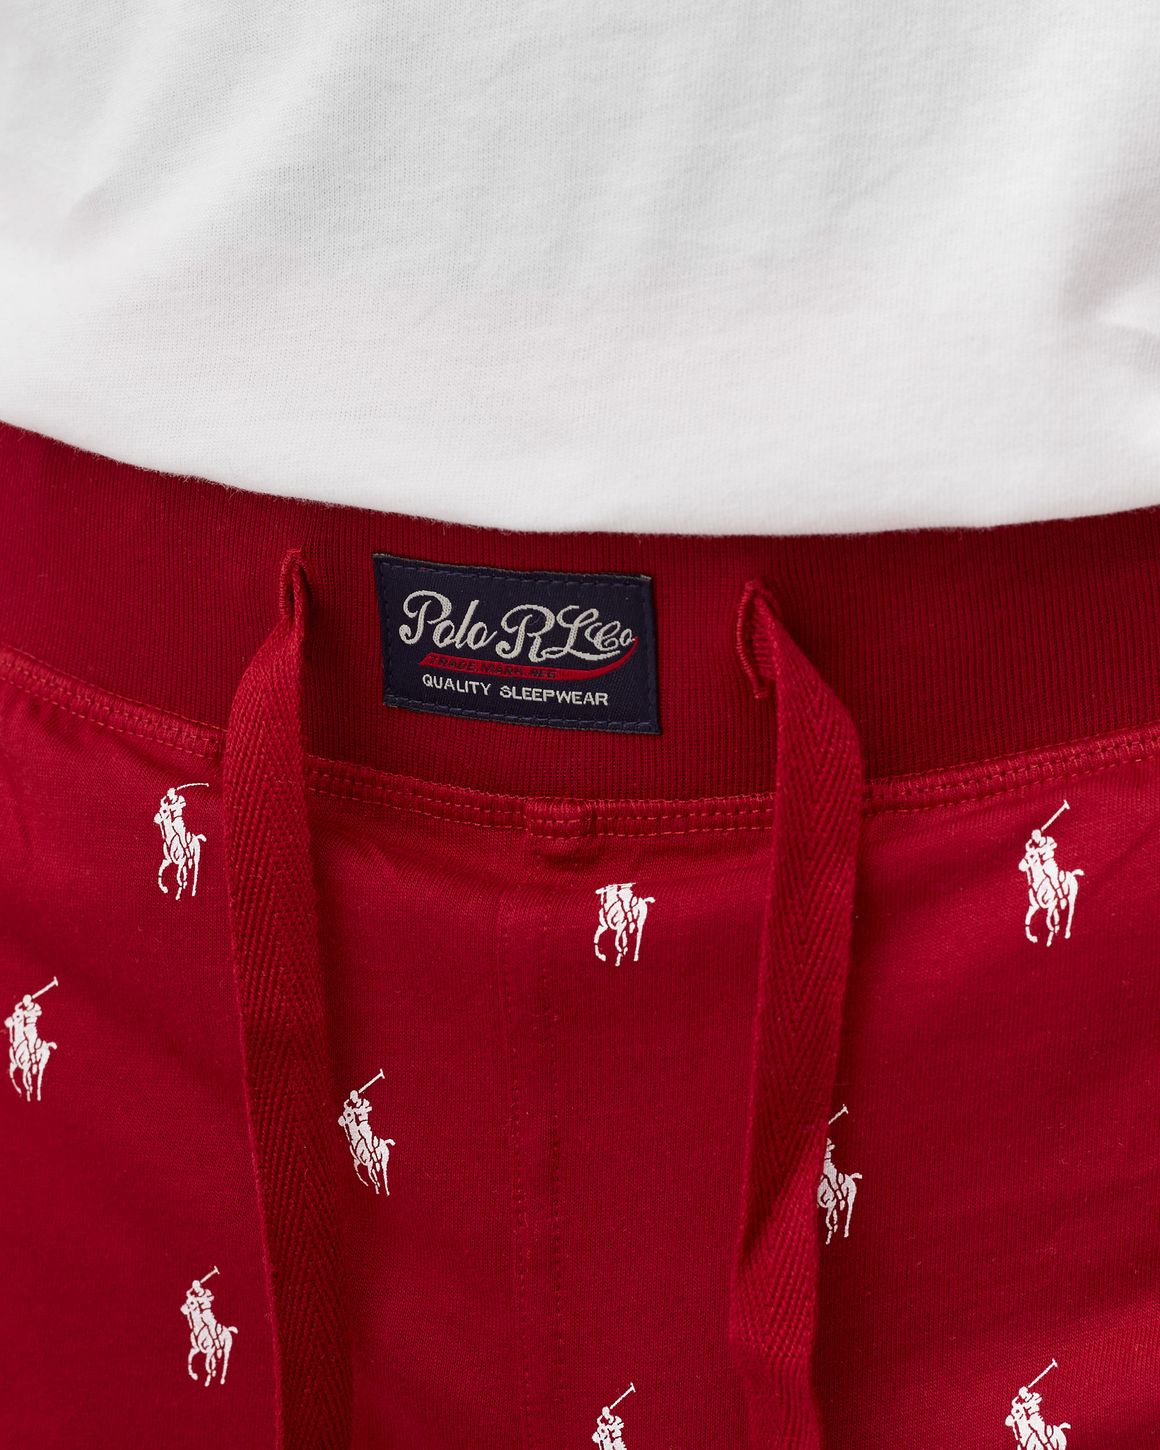 Short Lounge Polo Ralph Lauren 🏇🏼 color rojo con diseño de logos en blanco Talla L